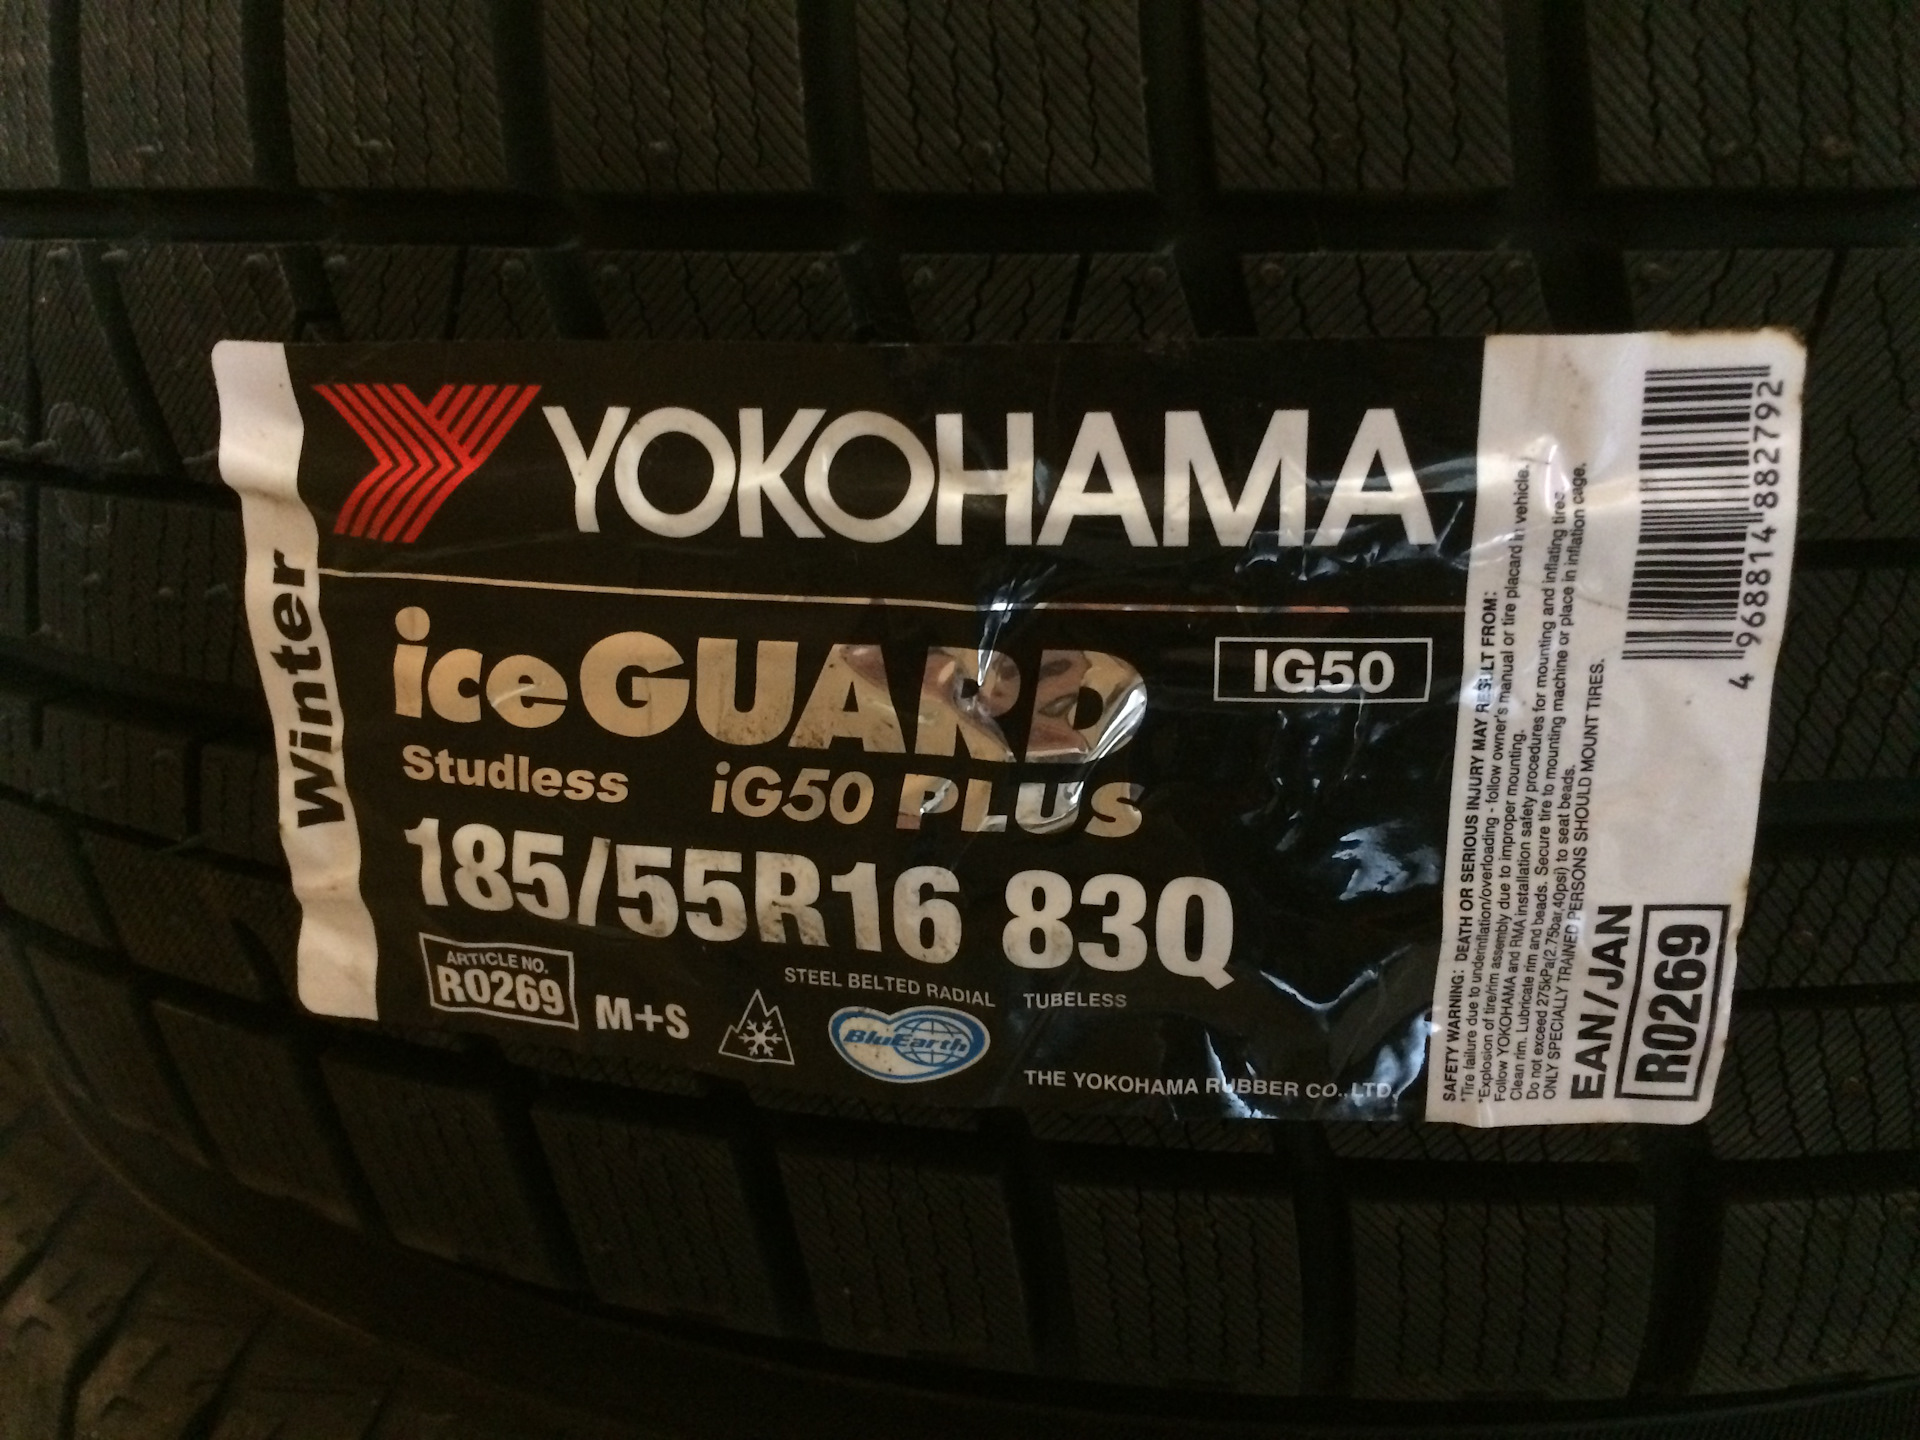 Шины йокогама айс. Yokohama Ice Guard ig50. Ice Guard ig50 Plus. Резина Yokohama Ice Guard ig50 Plus. Йокогама айс гуард ig 50 Plus.